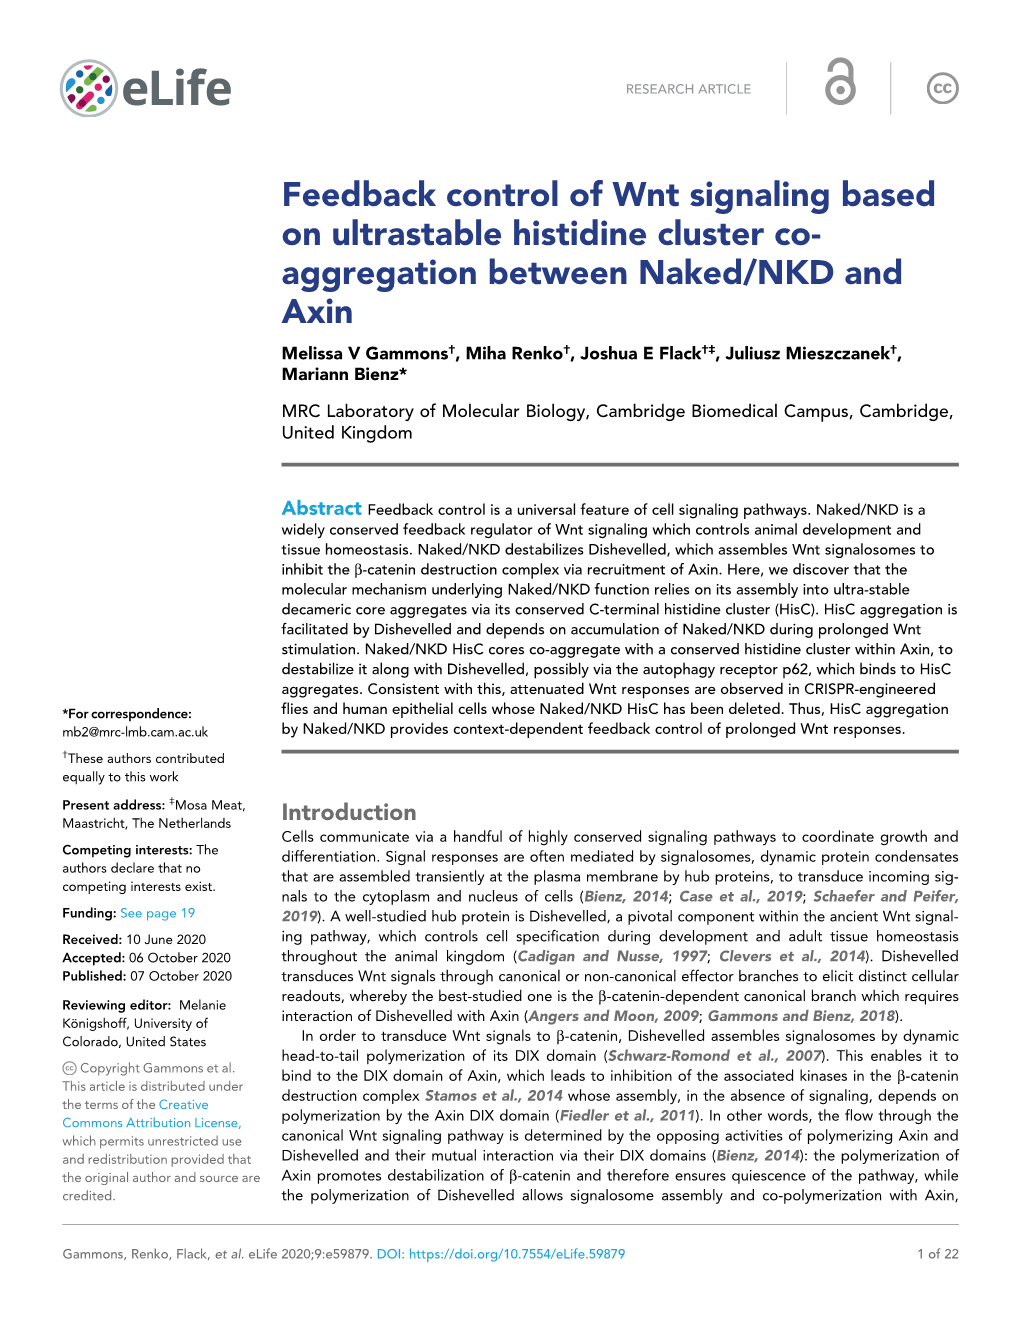 Feedback Control of Wnt Signaling Based on Ultrastable Histidine